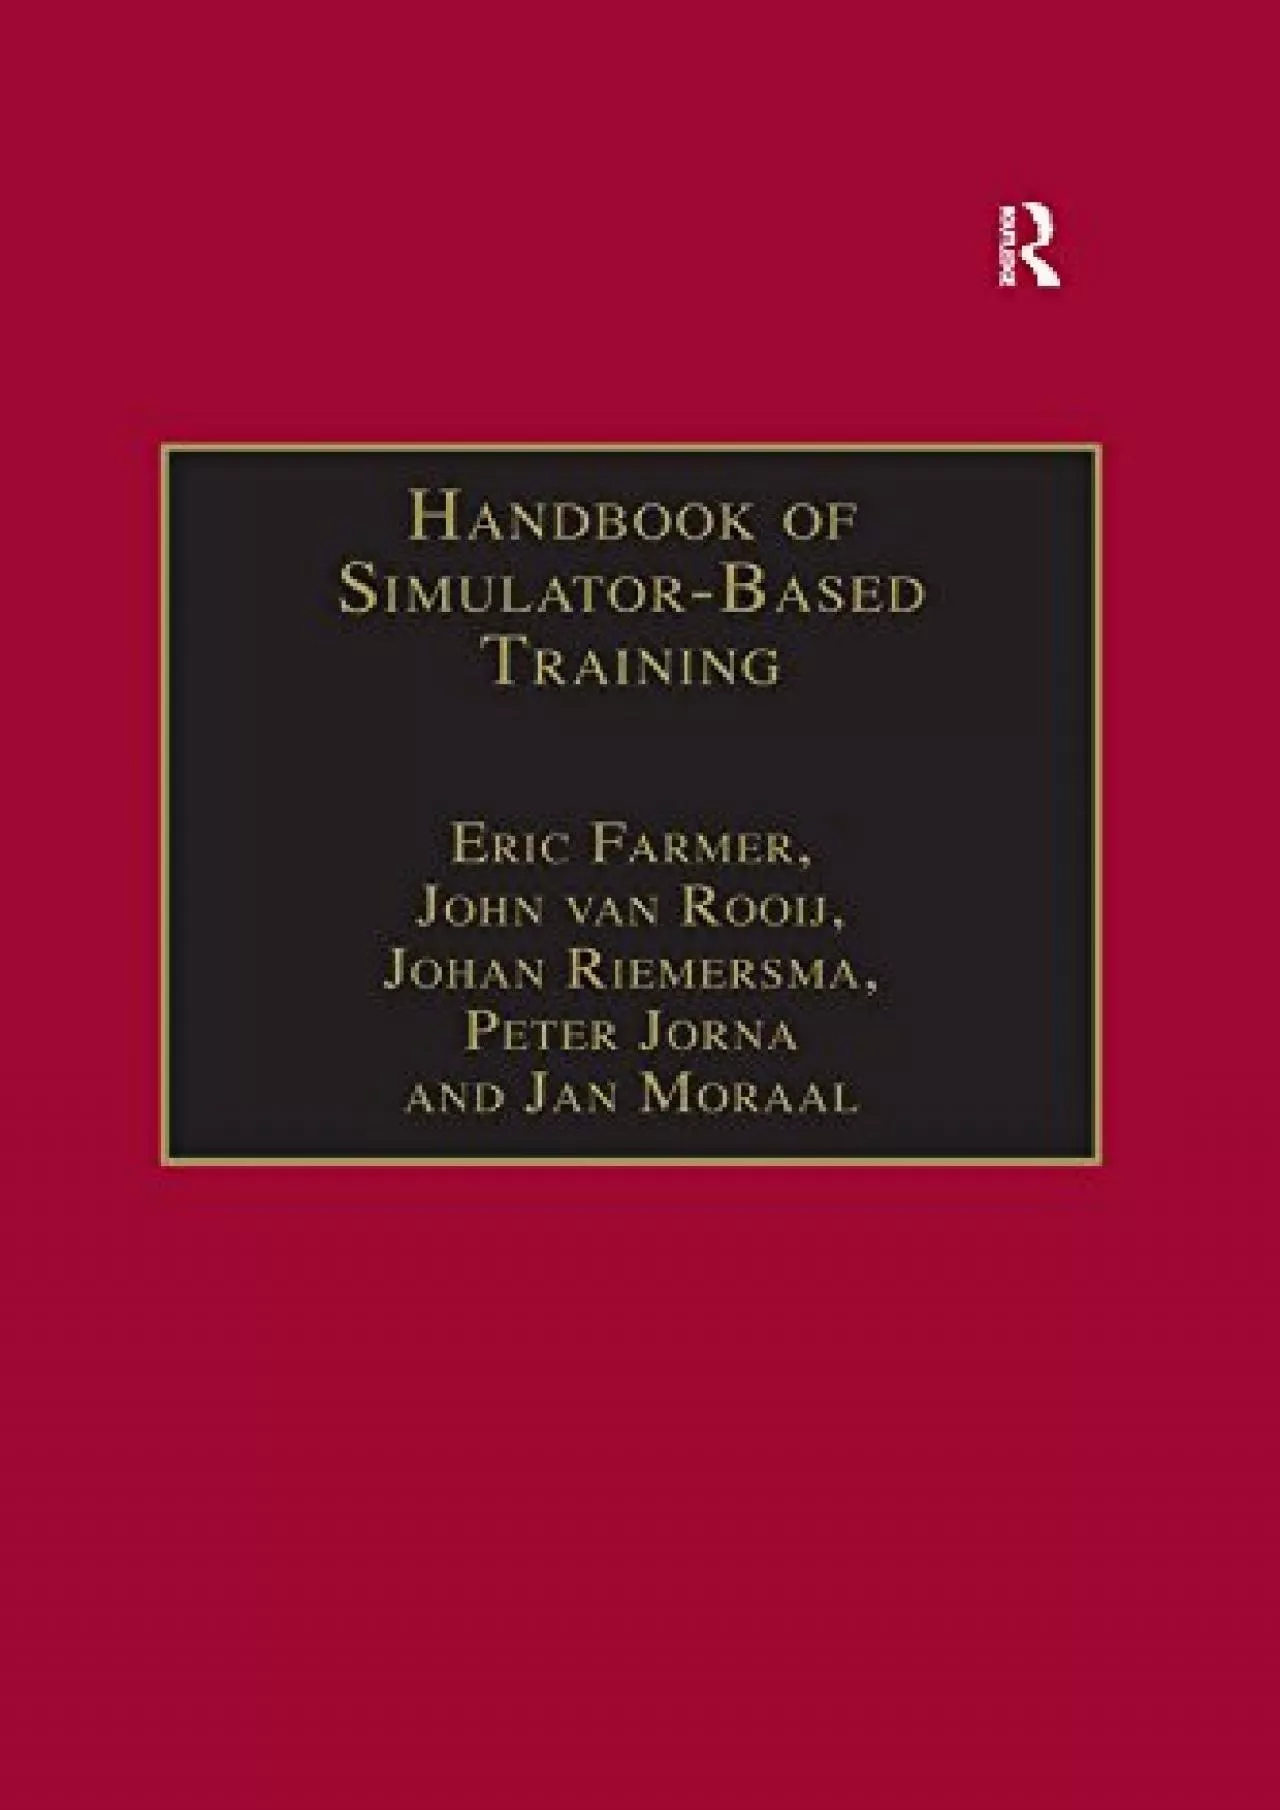 [EBOOK] Handbook of Simulator-Based Training